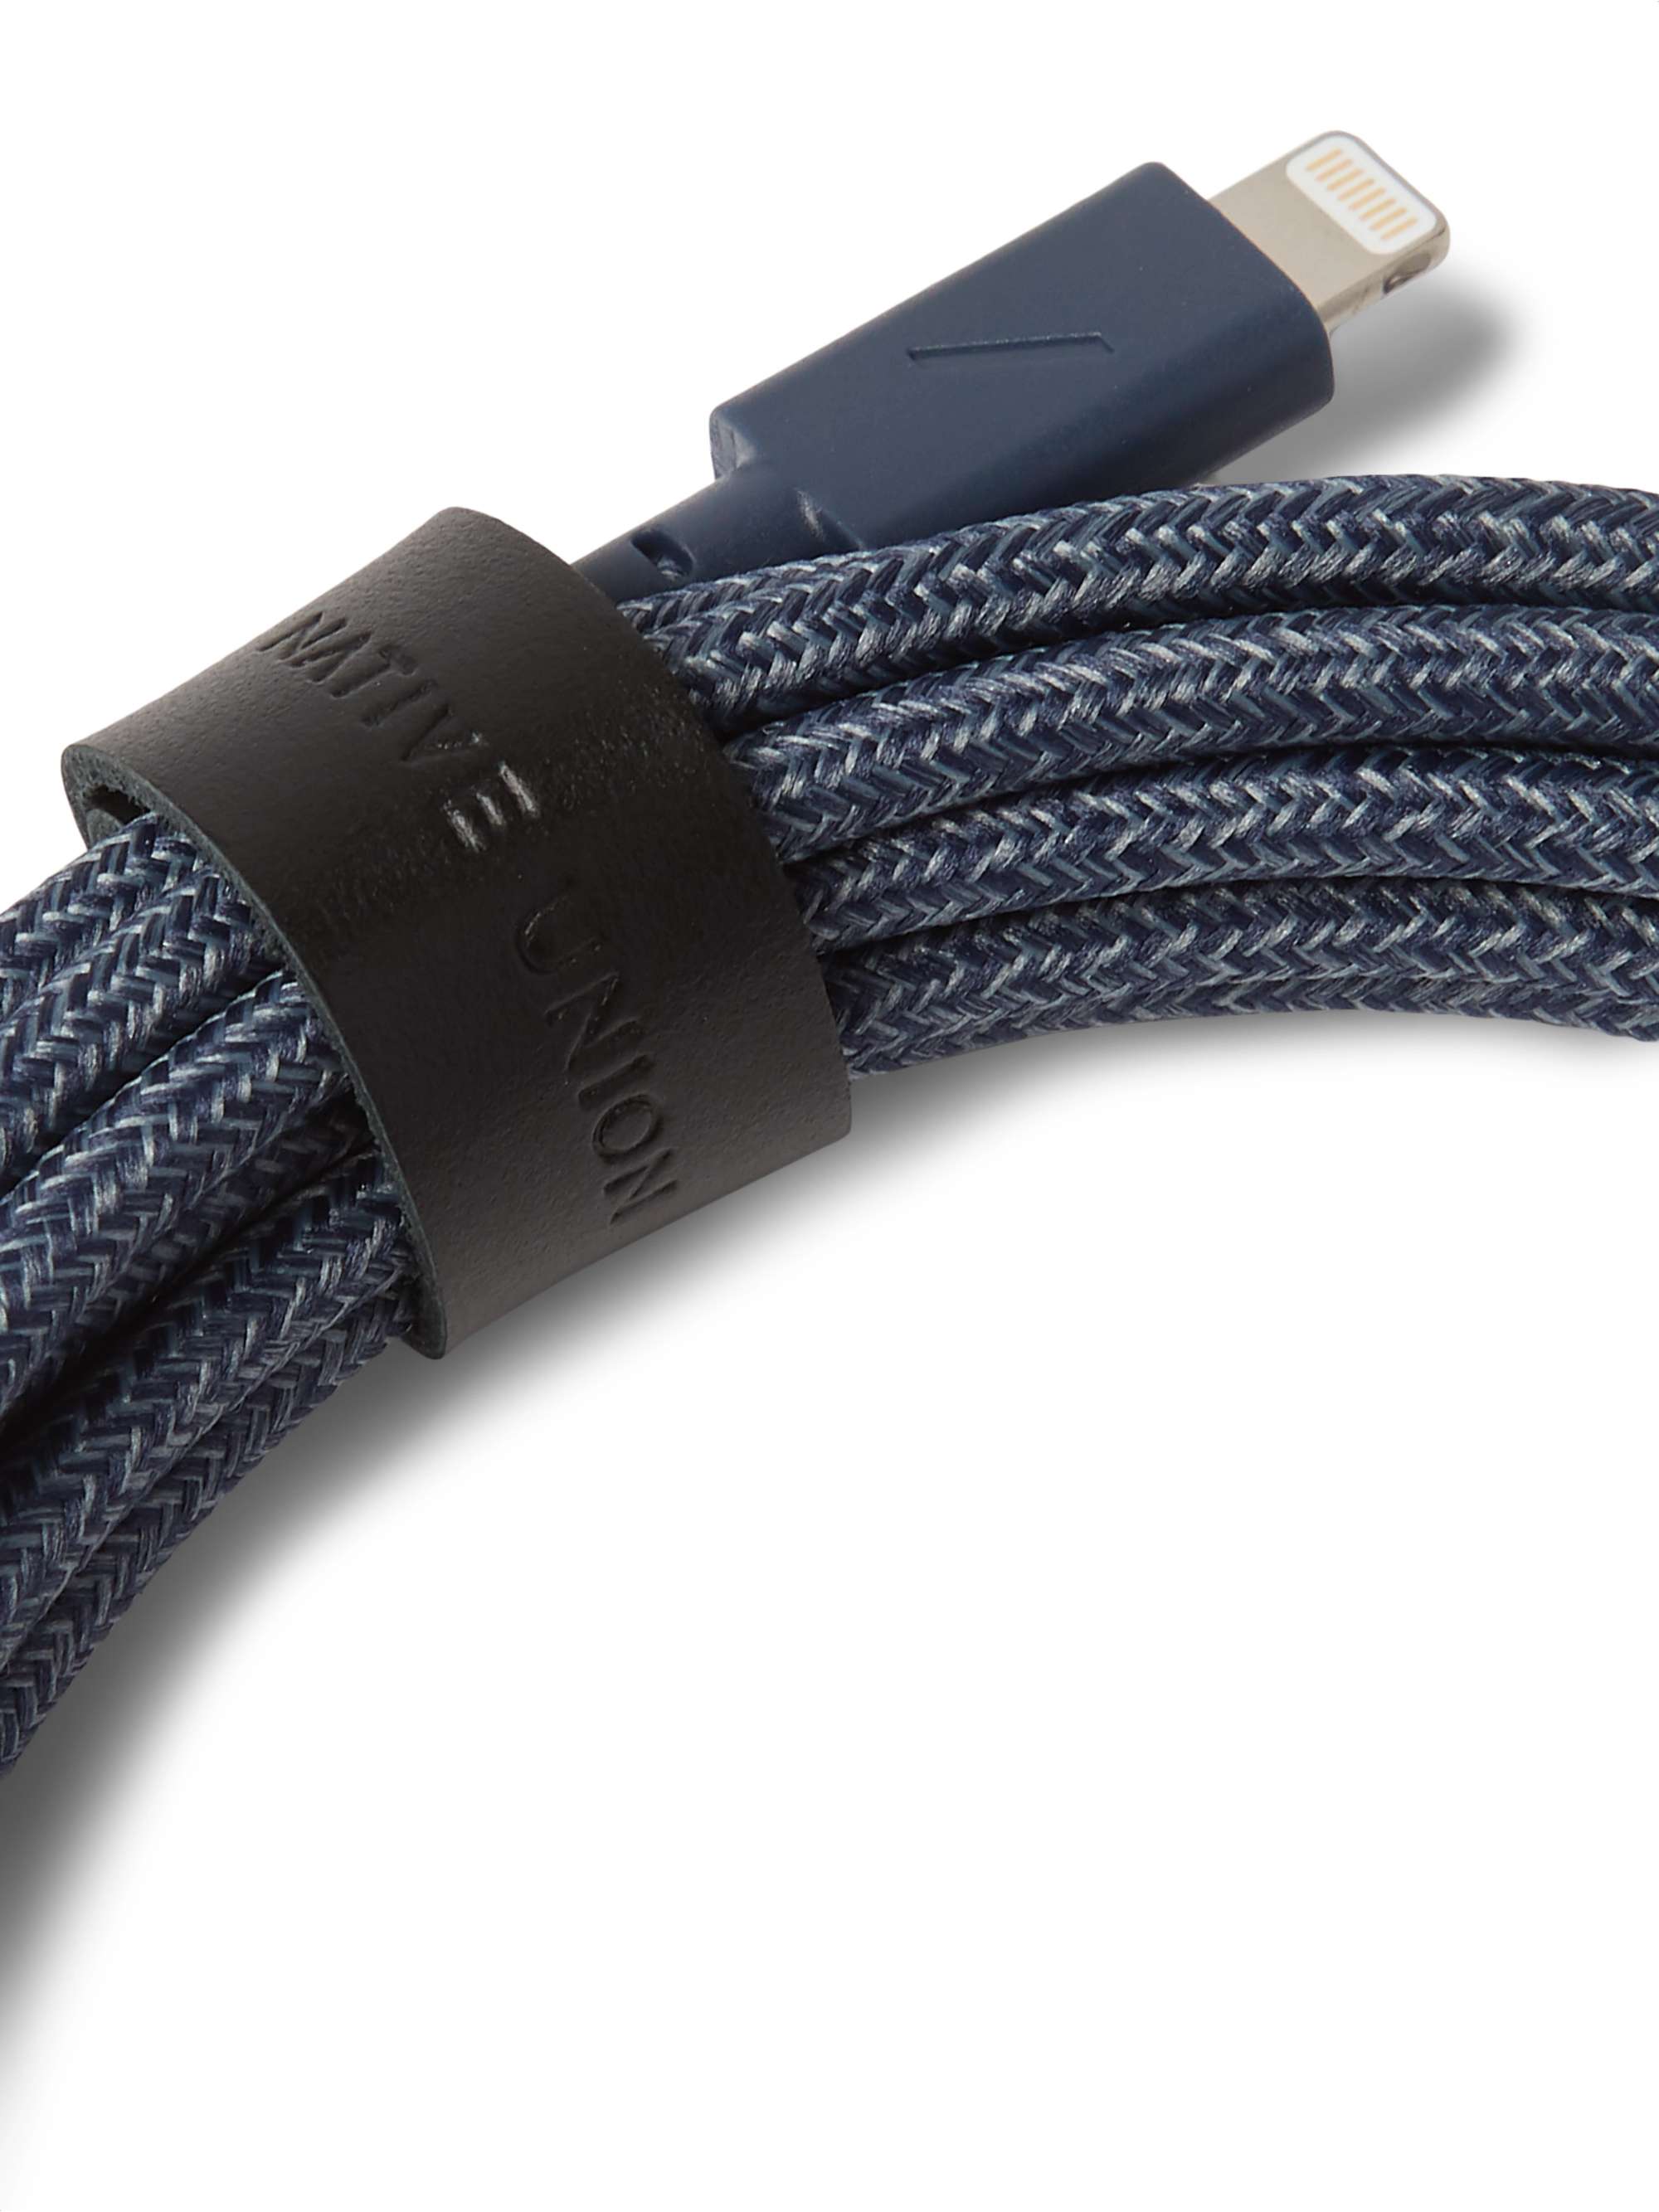 NATIVE UNION XL Belt Lightning Cable for Men | MR PORTER